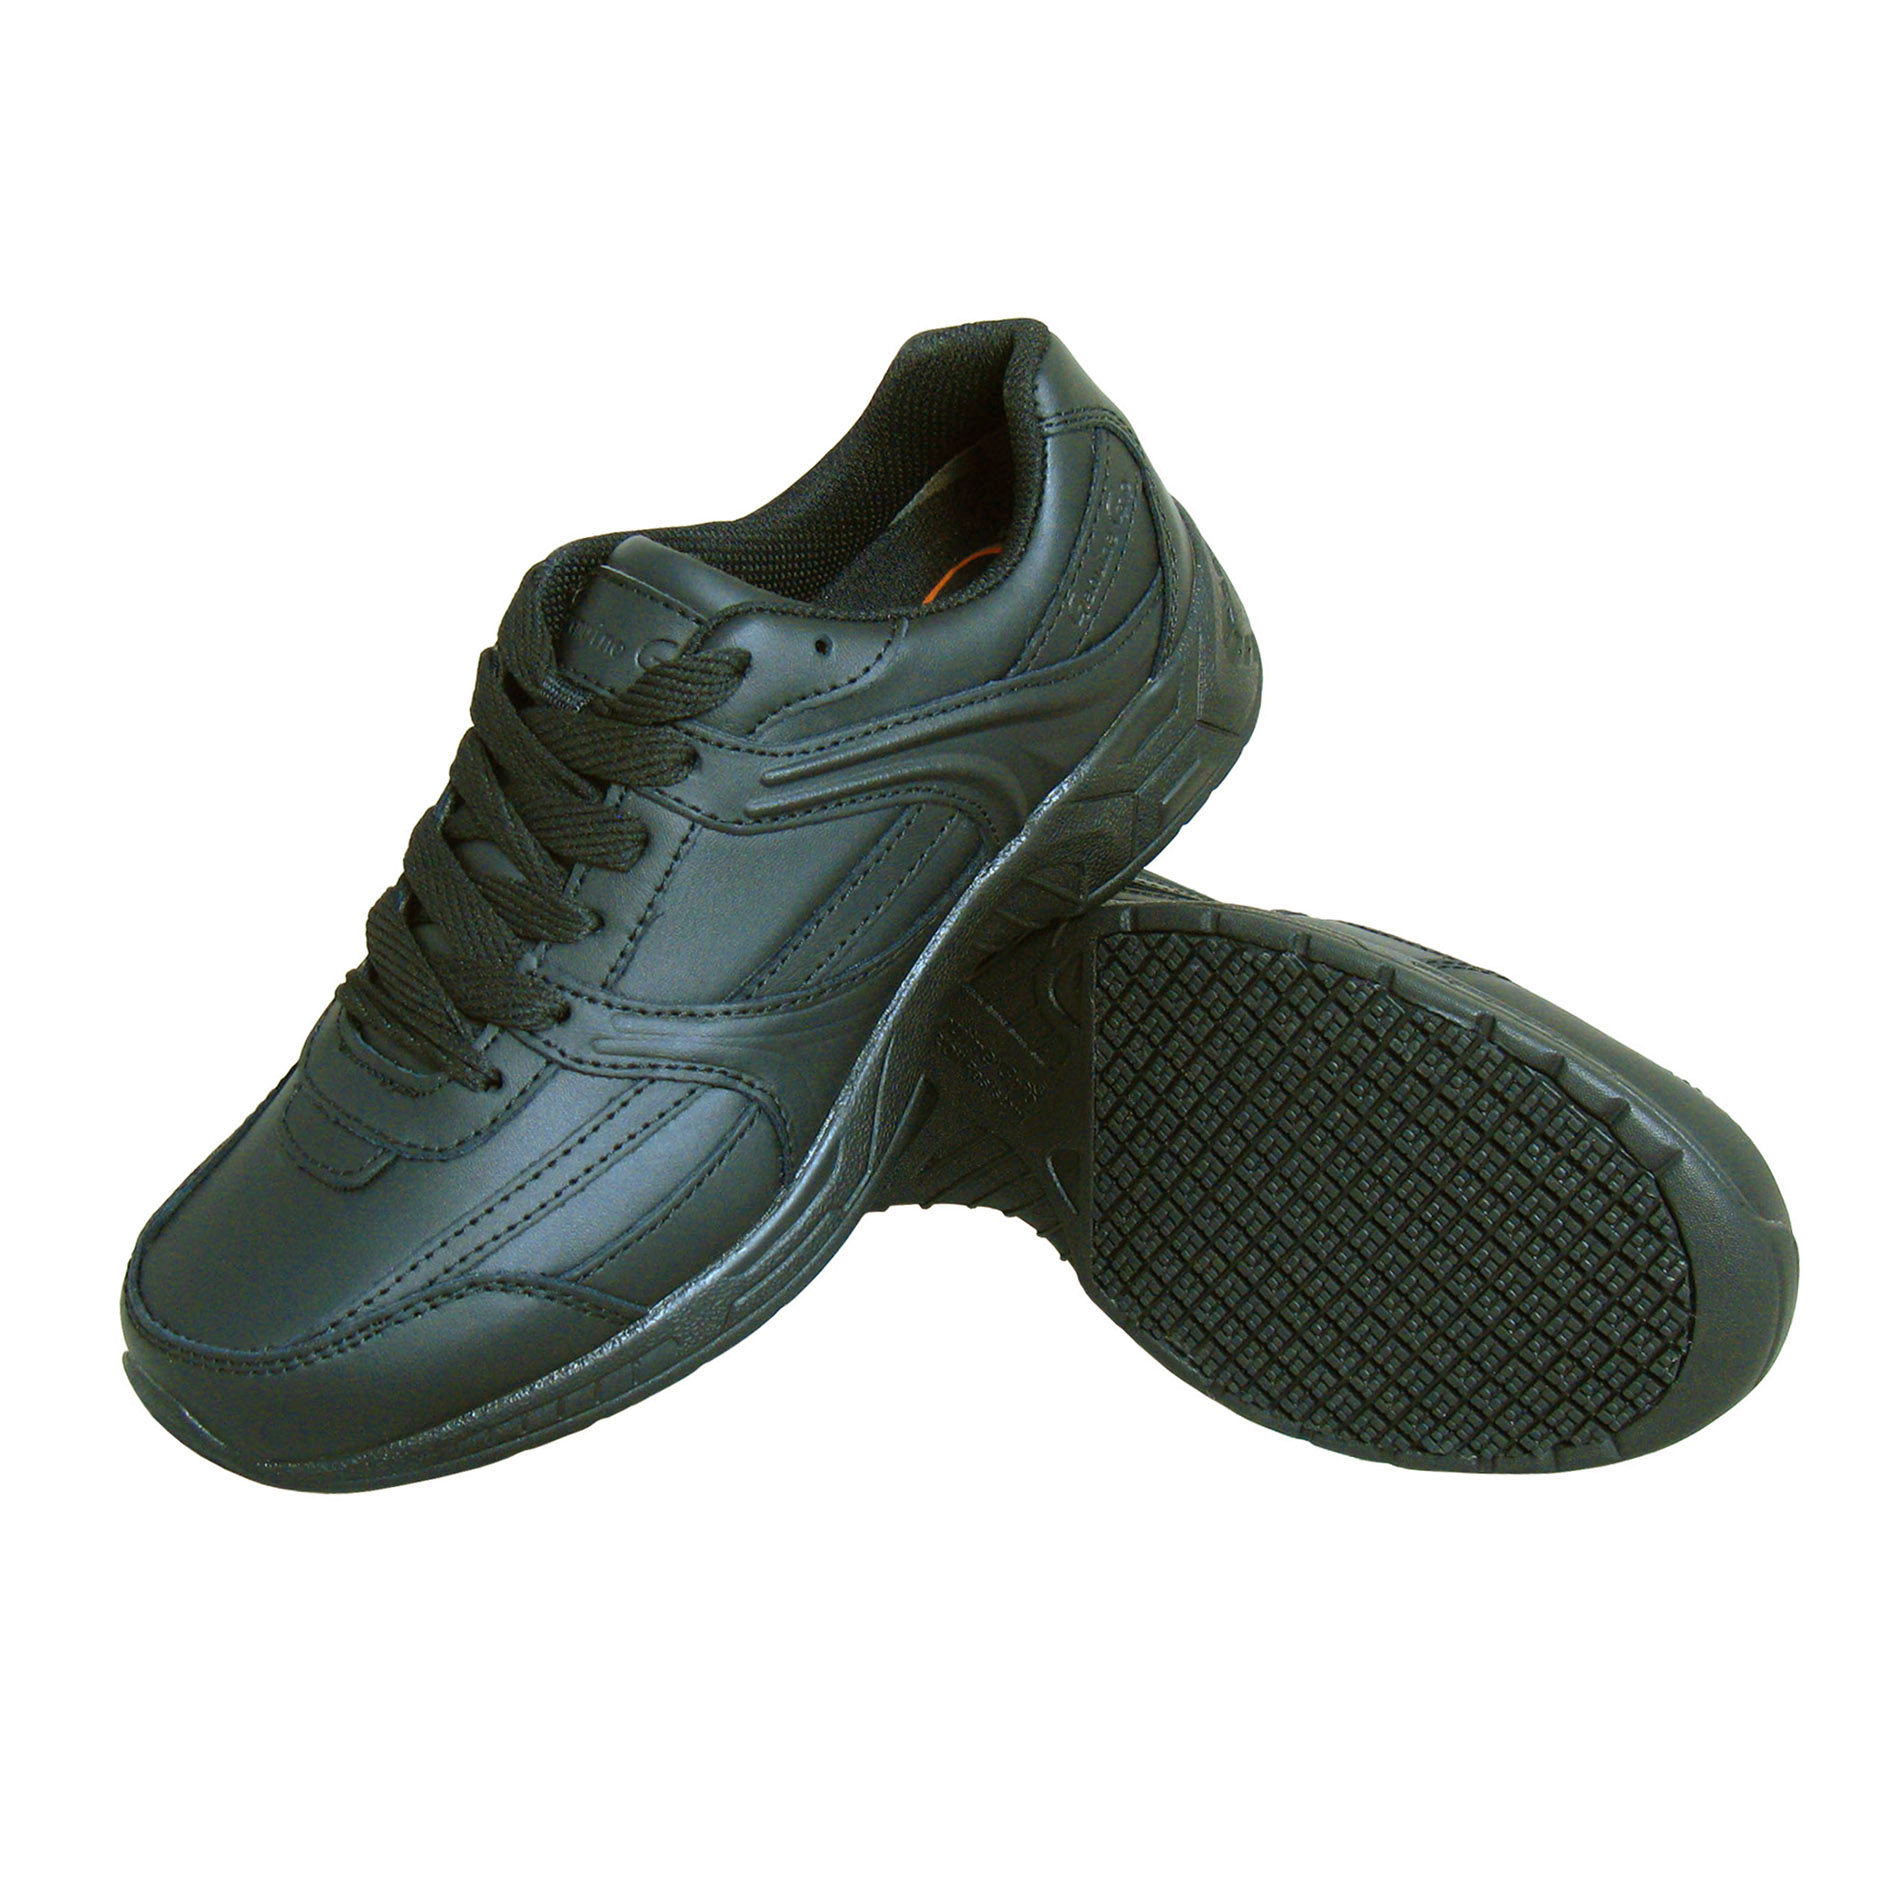 Genuine Grip Men's Leather Slip-Resistant Jogger Work Shoe #1010 Wide Width Available - Black